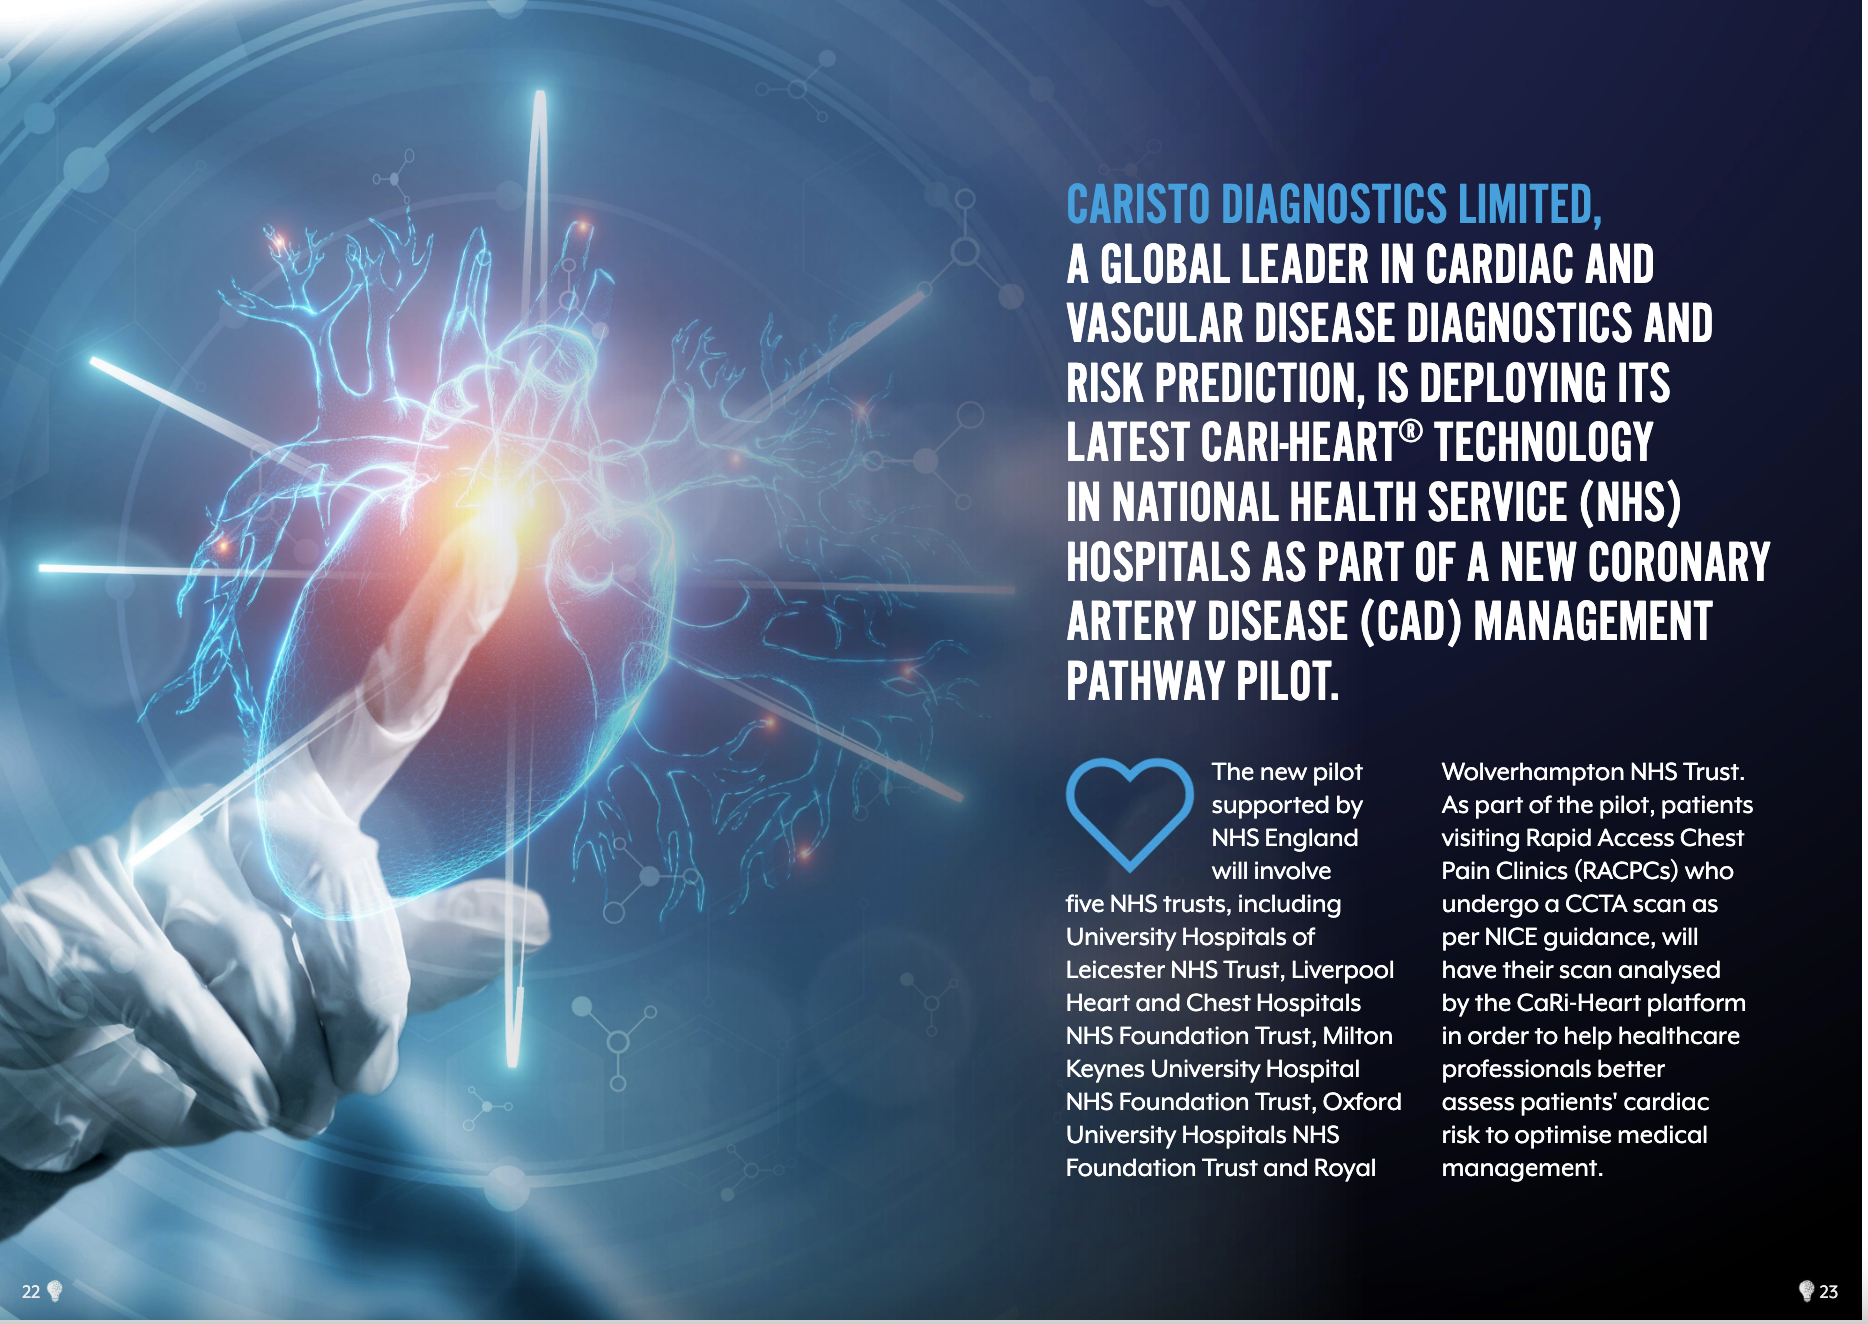 Article on Caristo in Digital Innovation Magazine